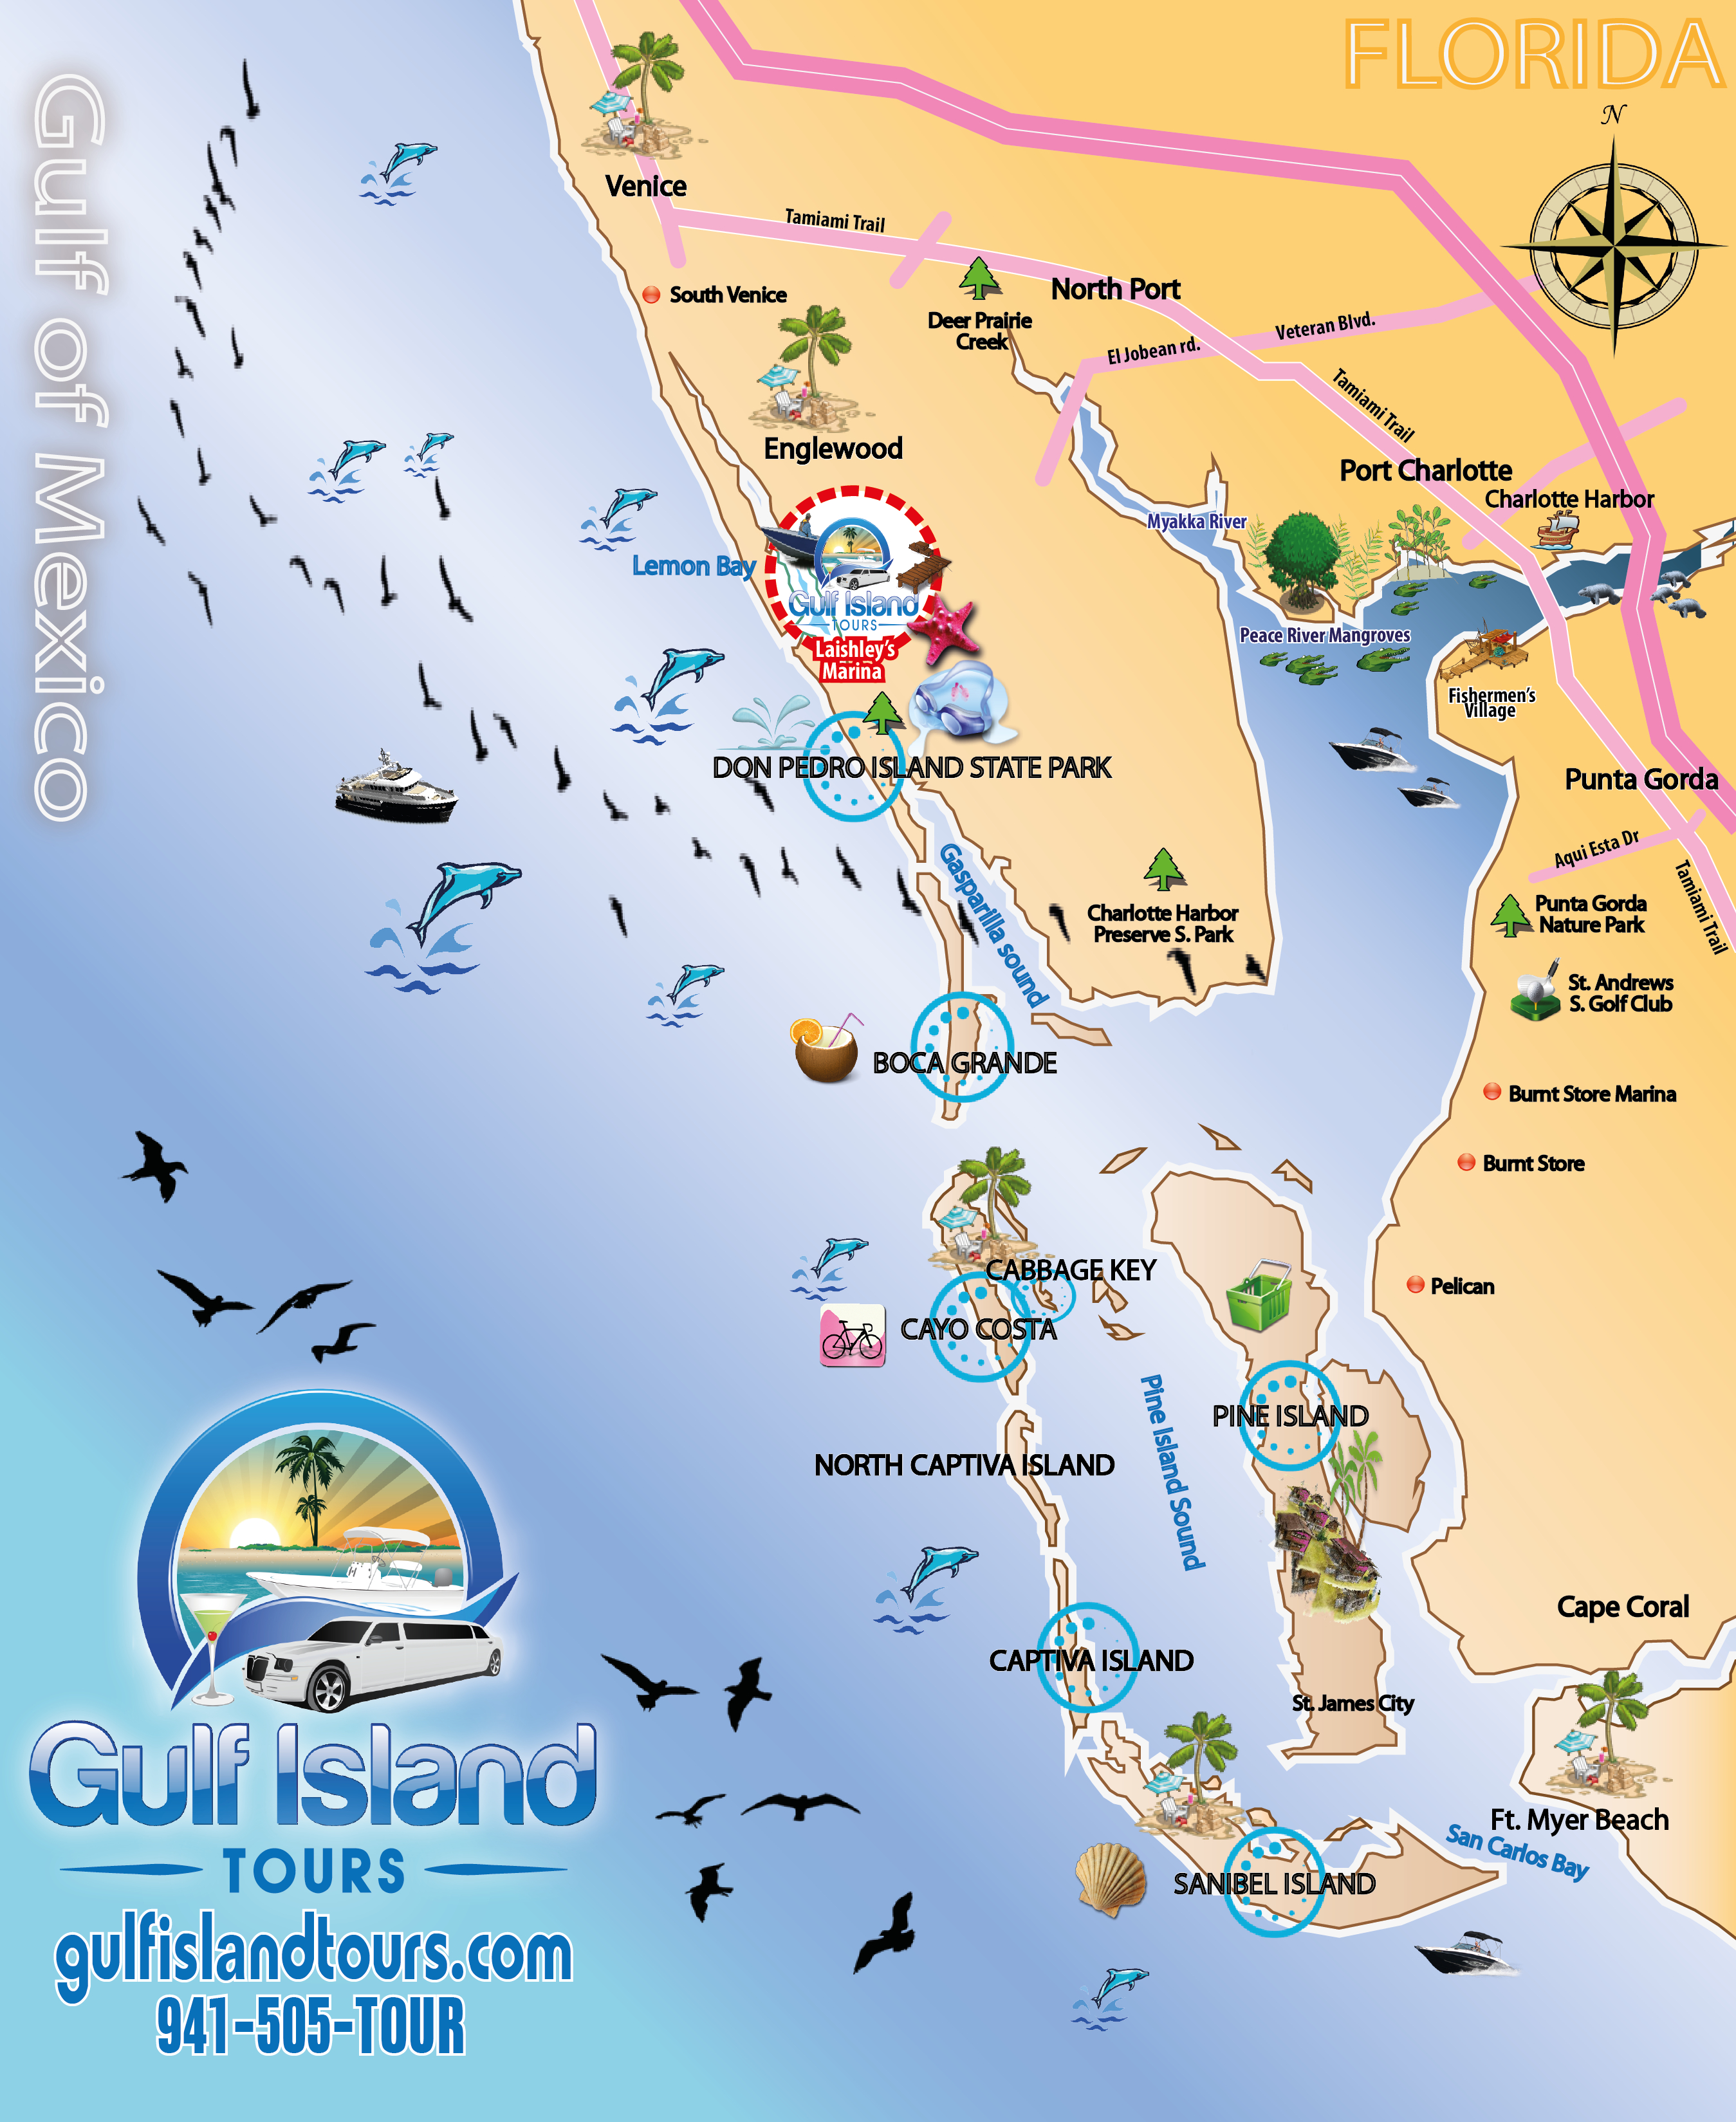 Boat Tours Englewood Fl - 941-505-8687 - Gulf Island Tours Offers - Map Of Florida Gulf Coast Islands